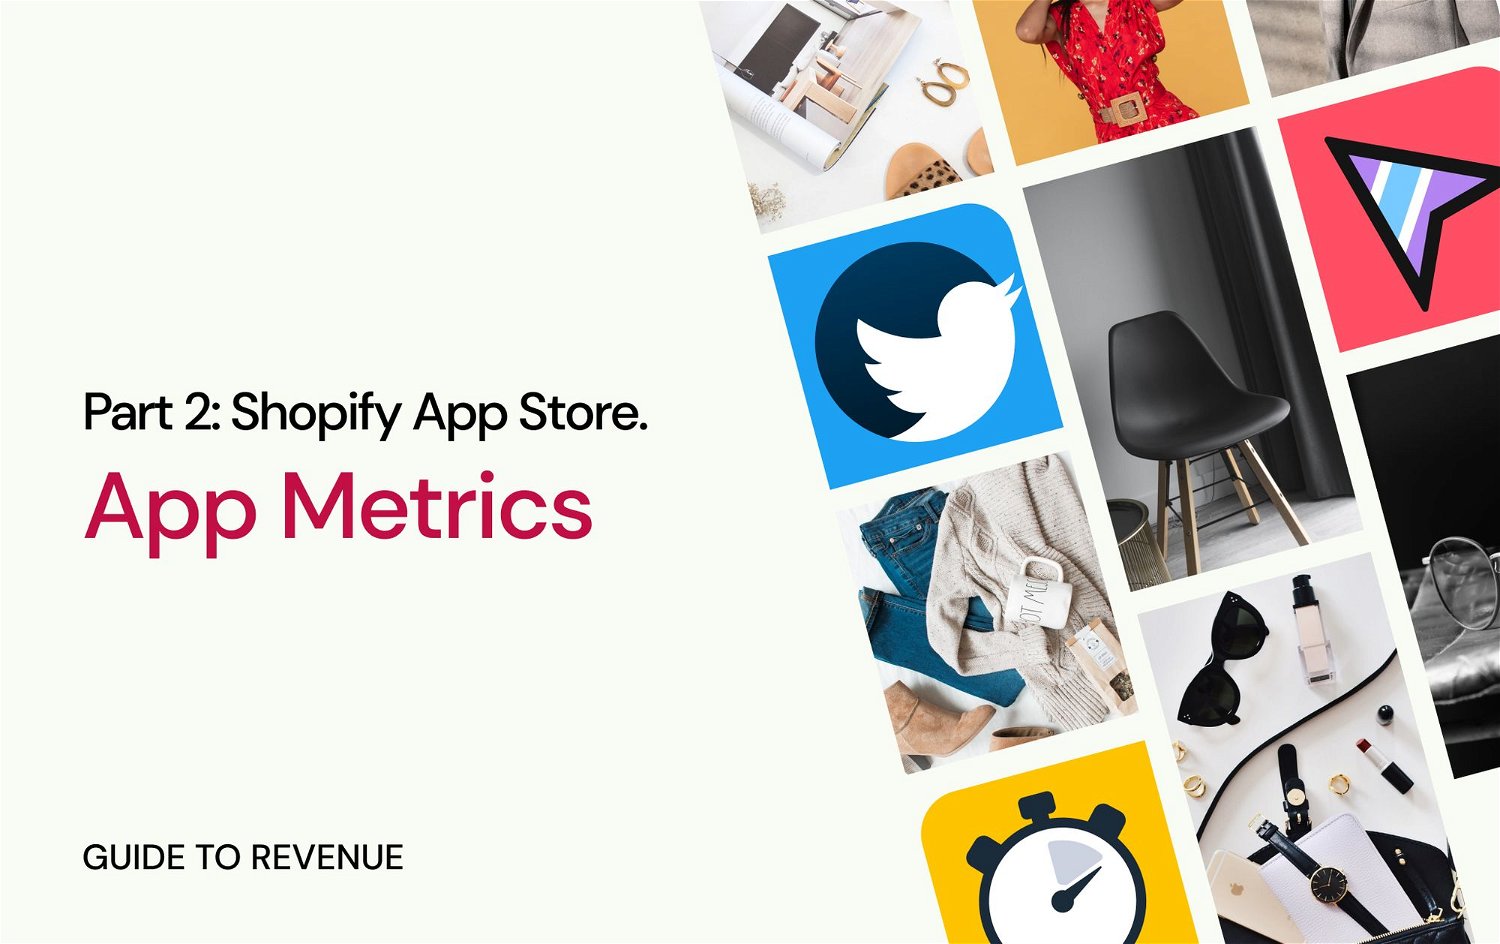 Shopify App Store. Guide to revenue. App Metrics - SpurIT